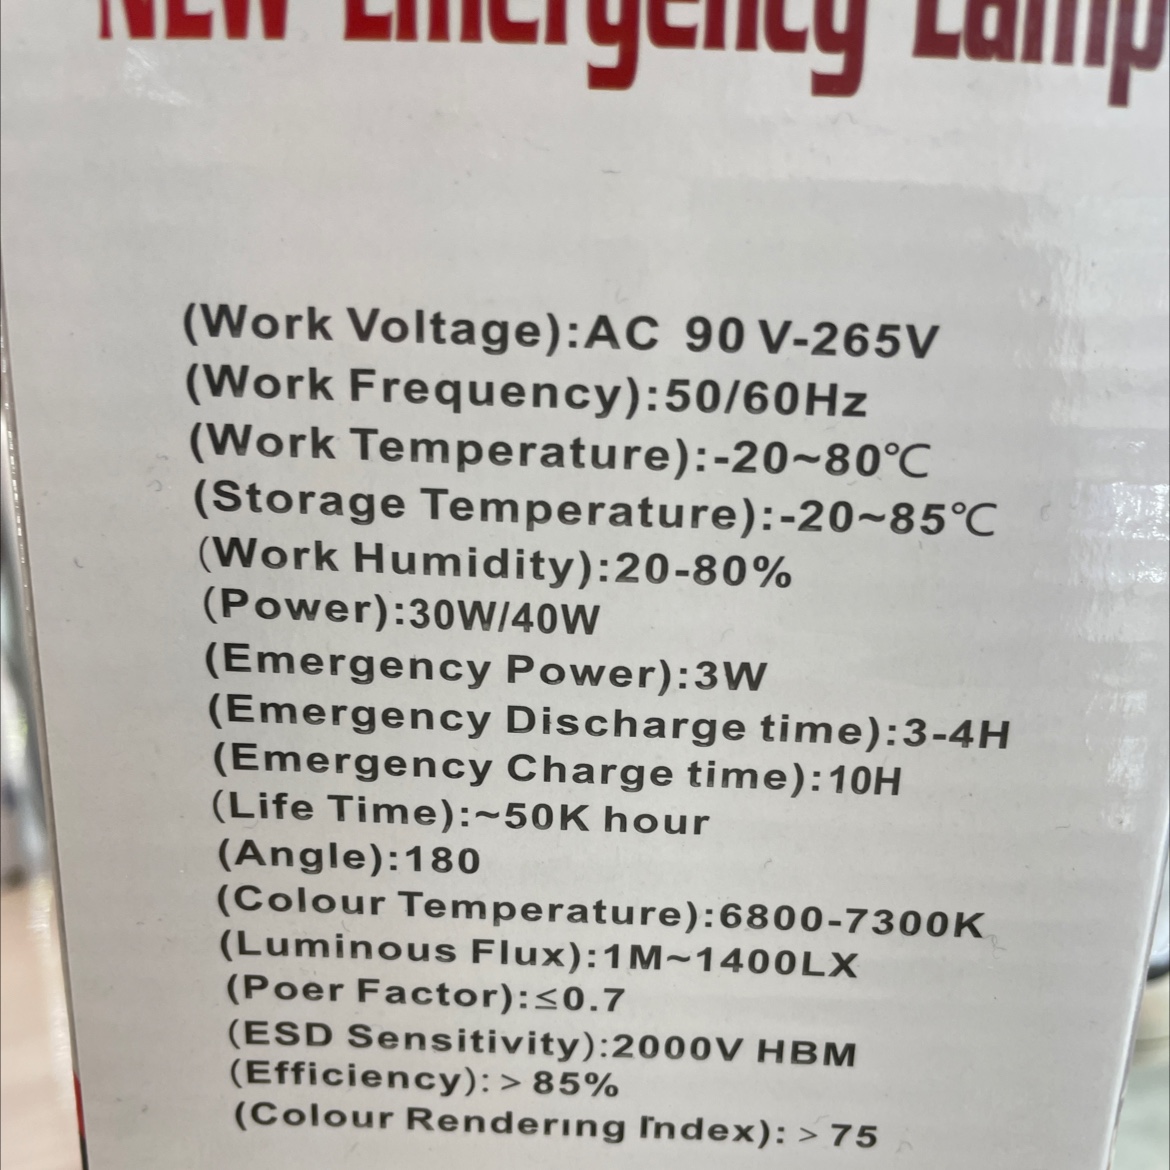 New emergency Lamp1
产品图